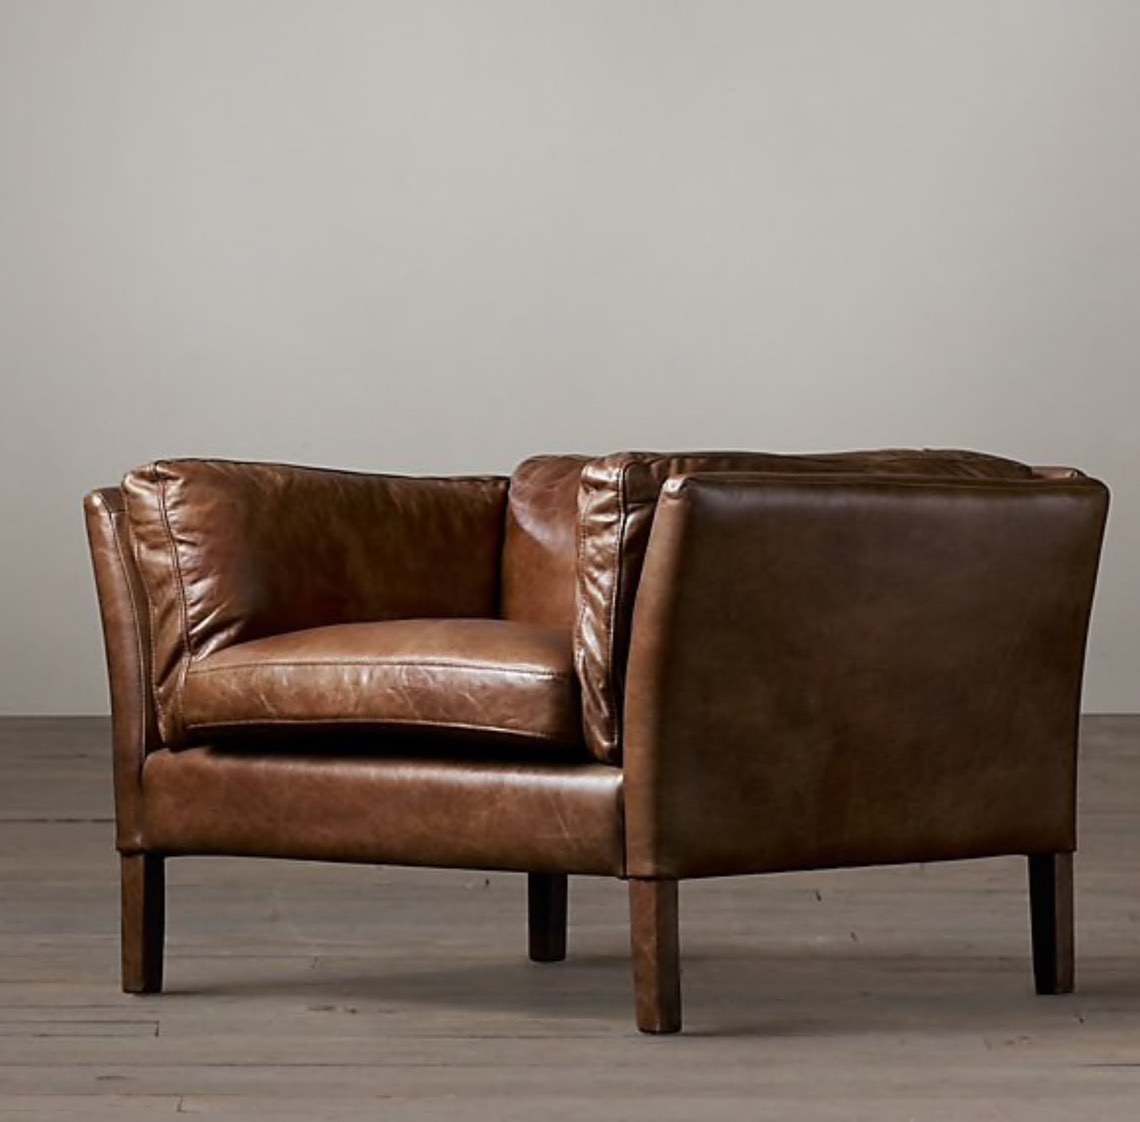 Made to Order Furniture. - Sofa 043-01